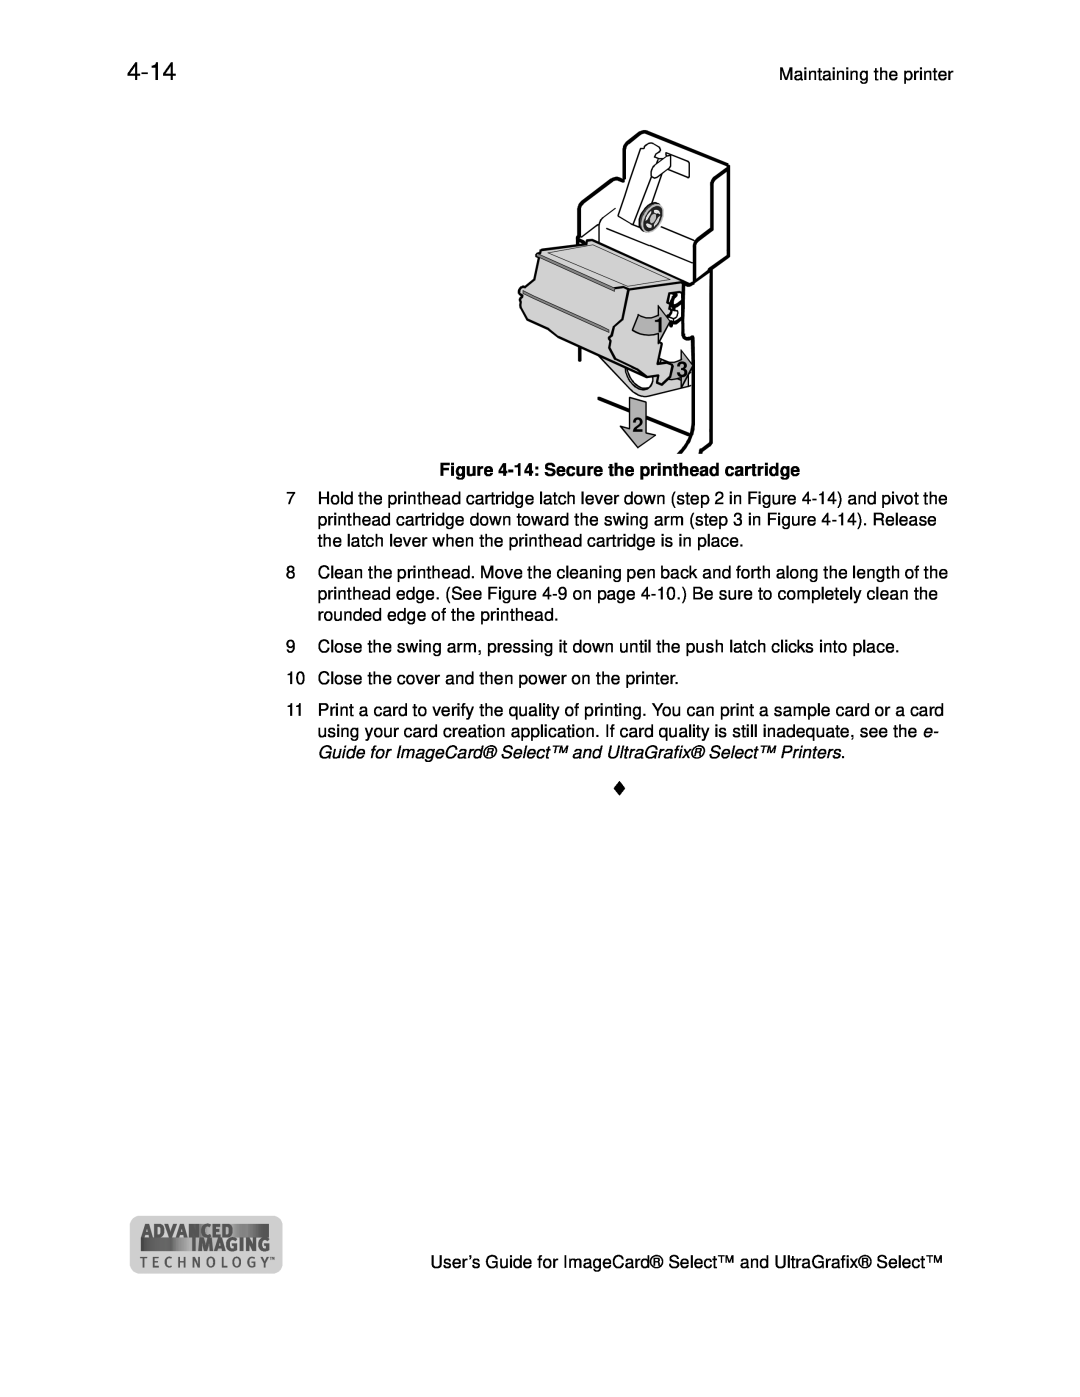 Datacard Group ImageCard SelectTM and UltraGrafix SelectTM Printers manual 4-14, 14 Secure the printhead cartridge 